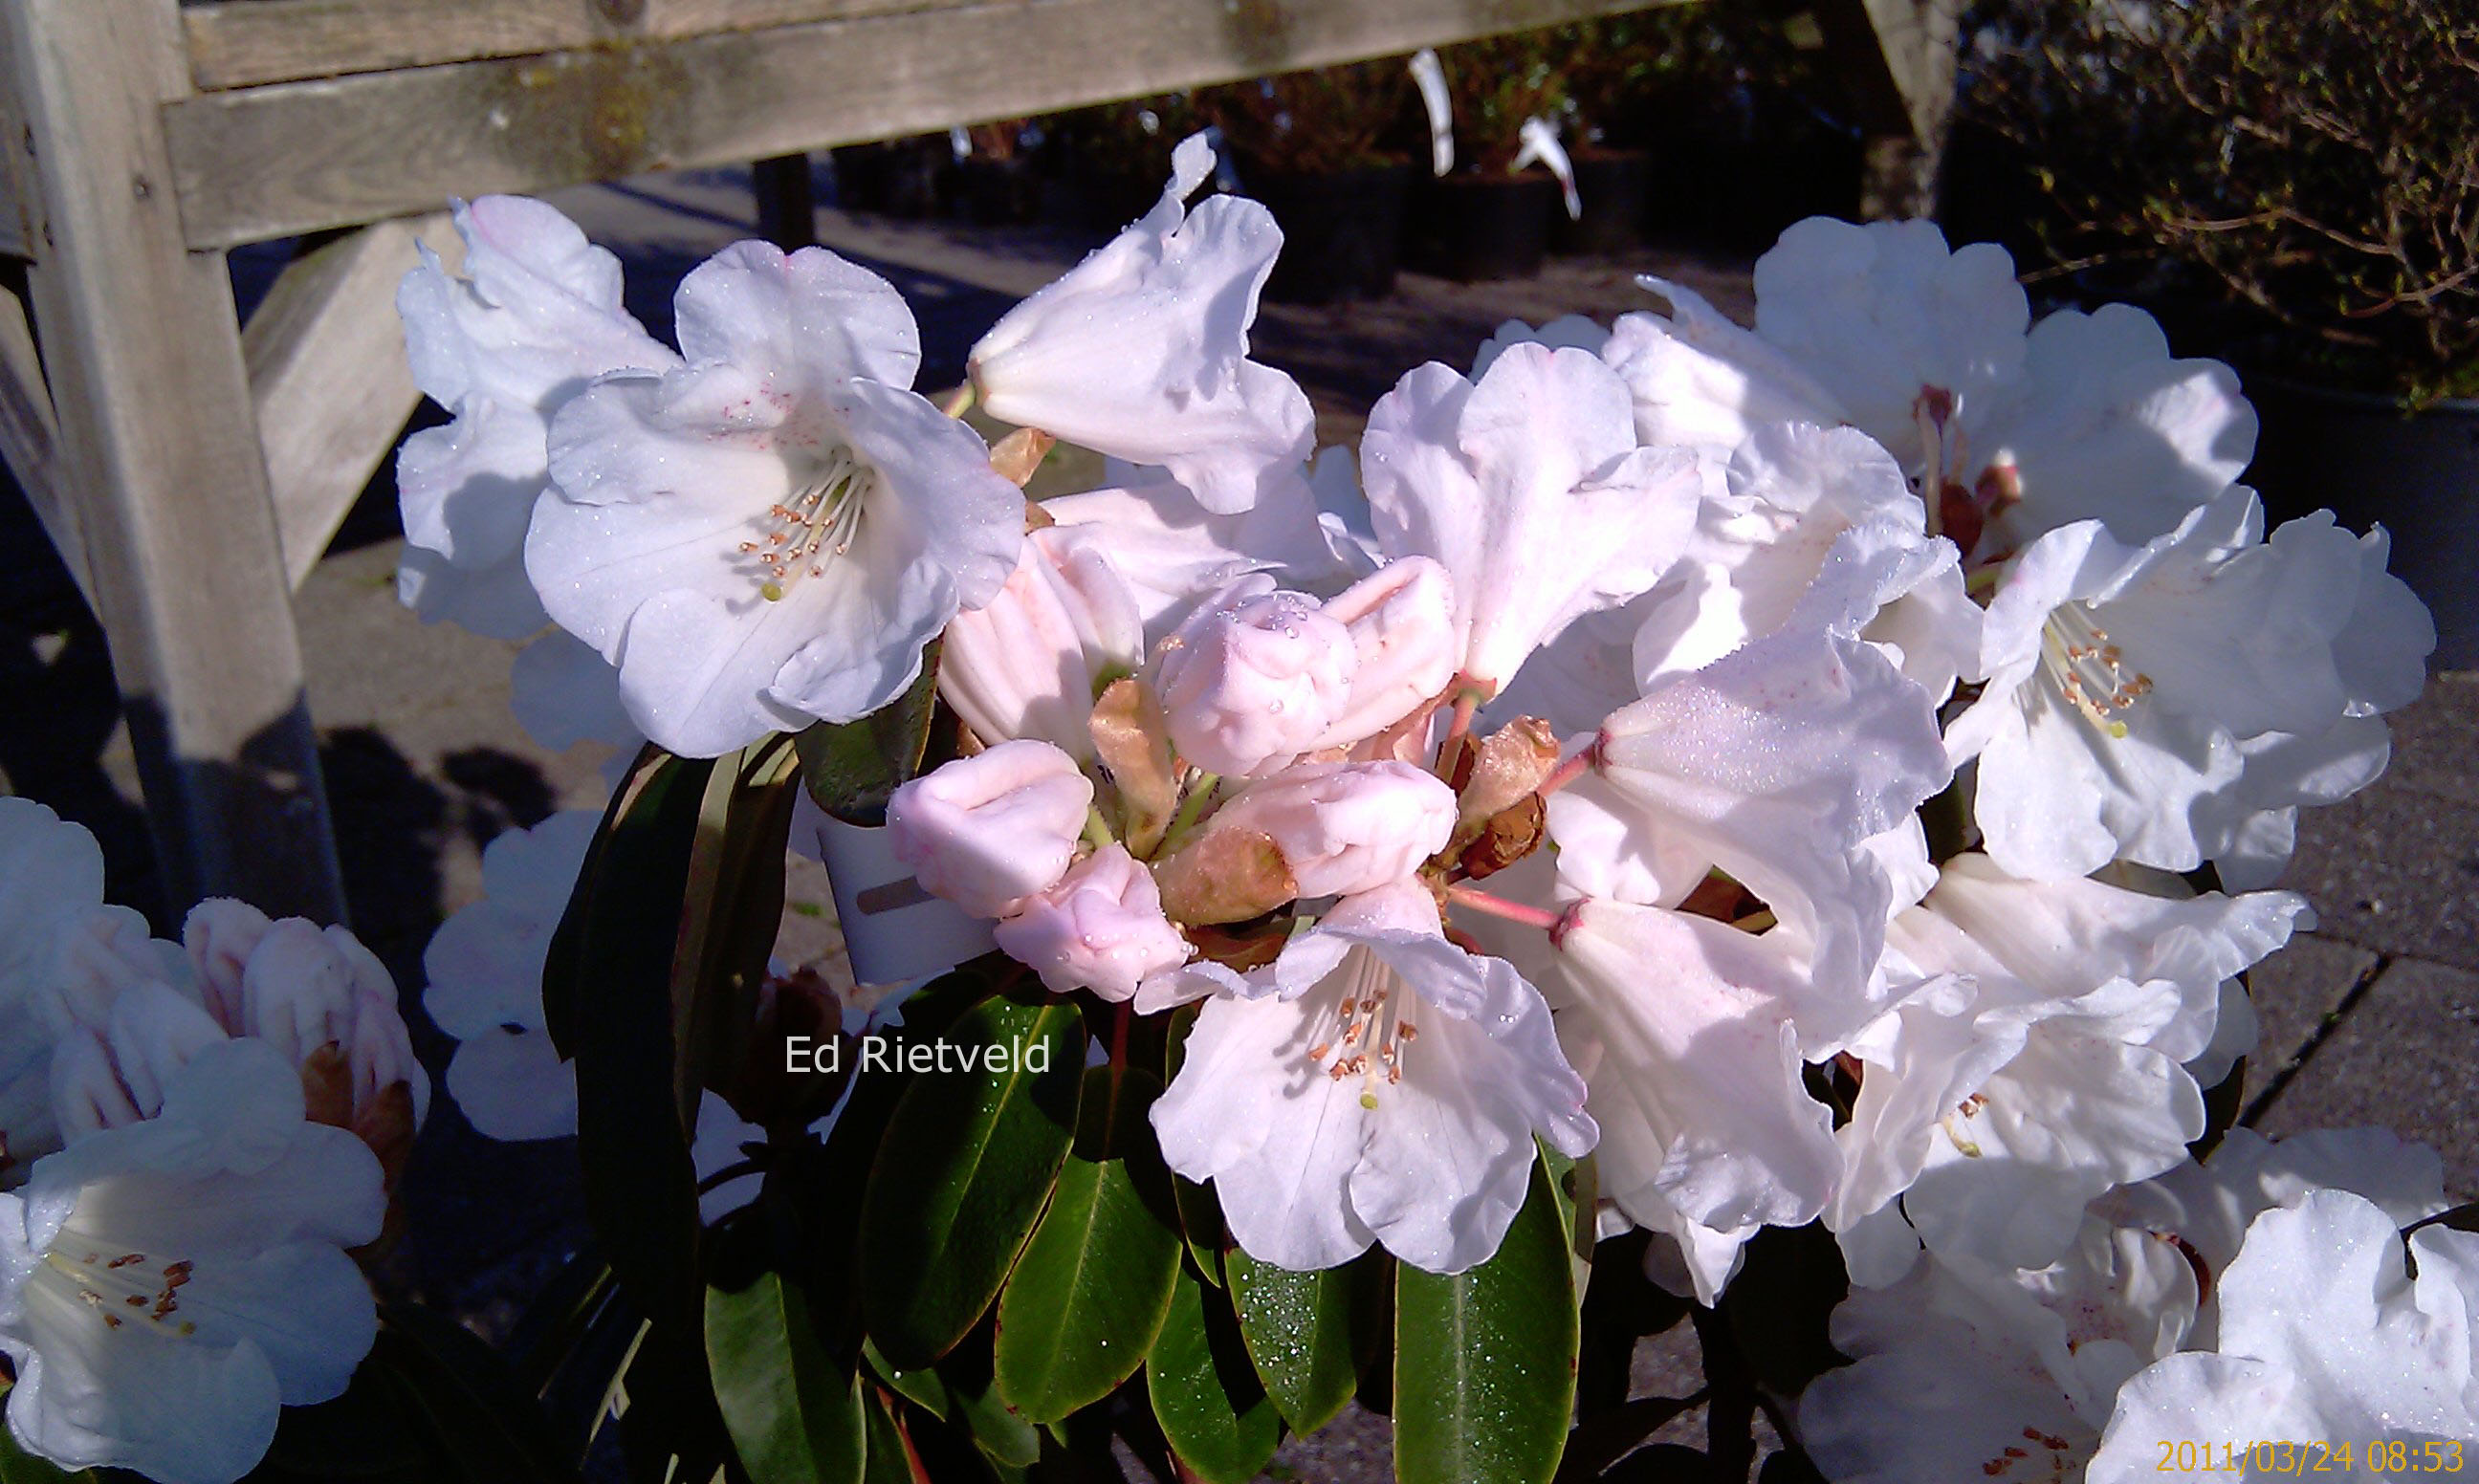 Rhododendron 'Carex White'